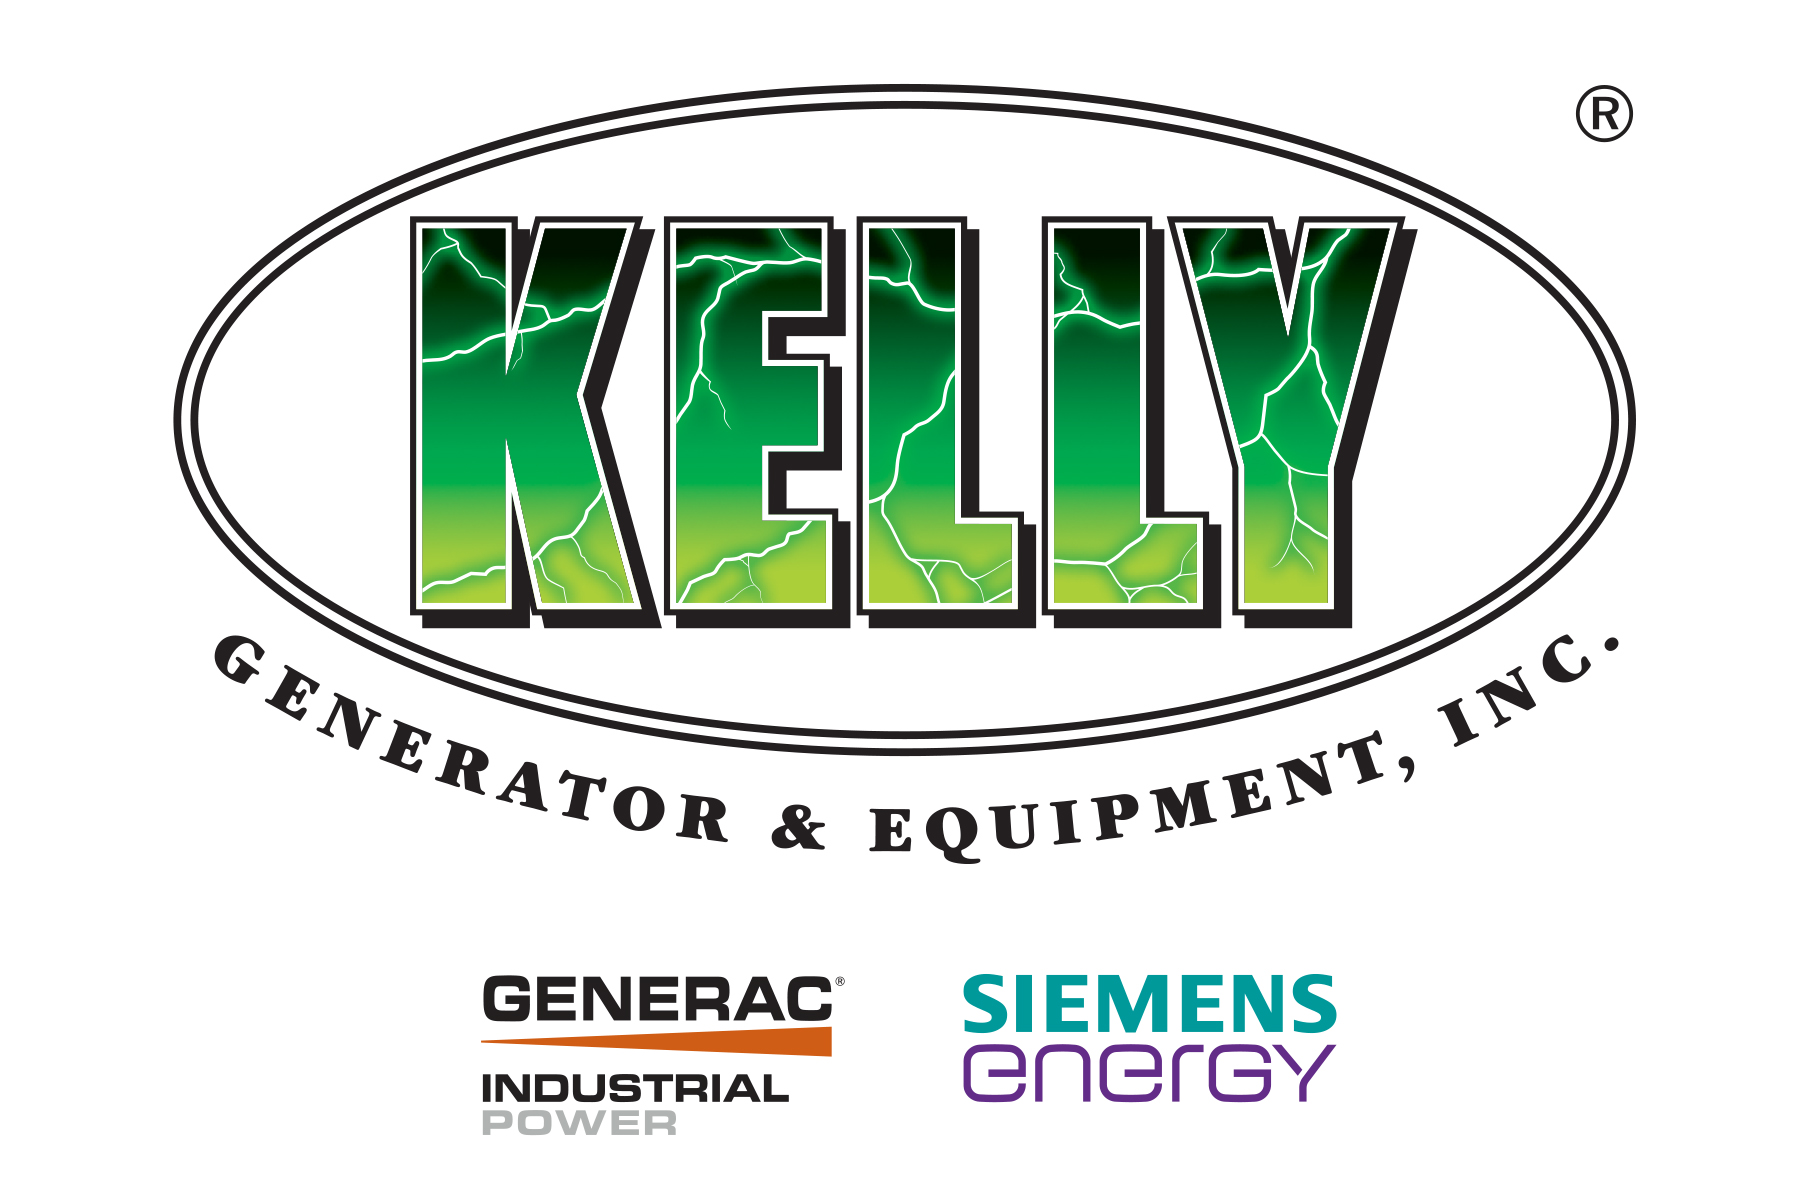 Kelly Generator and Equipment logo with Generac & Siemens